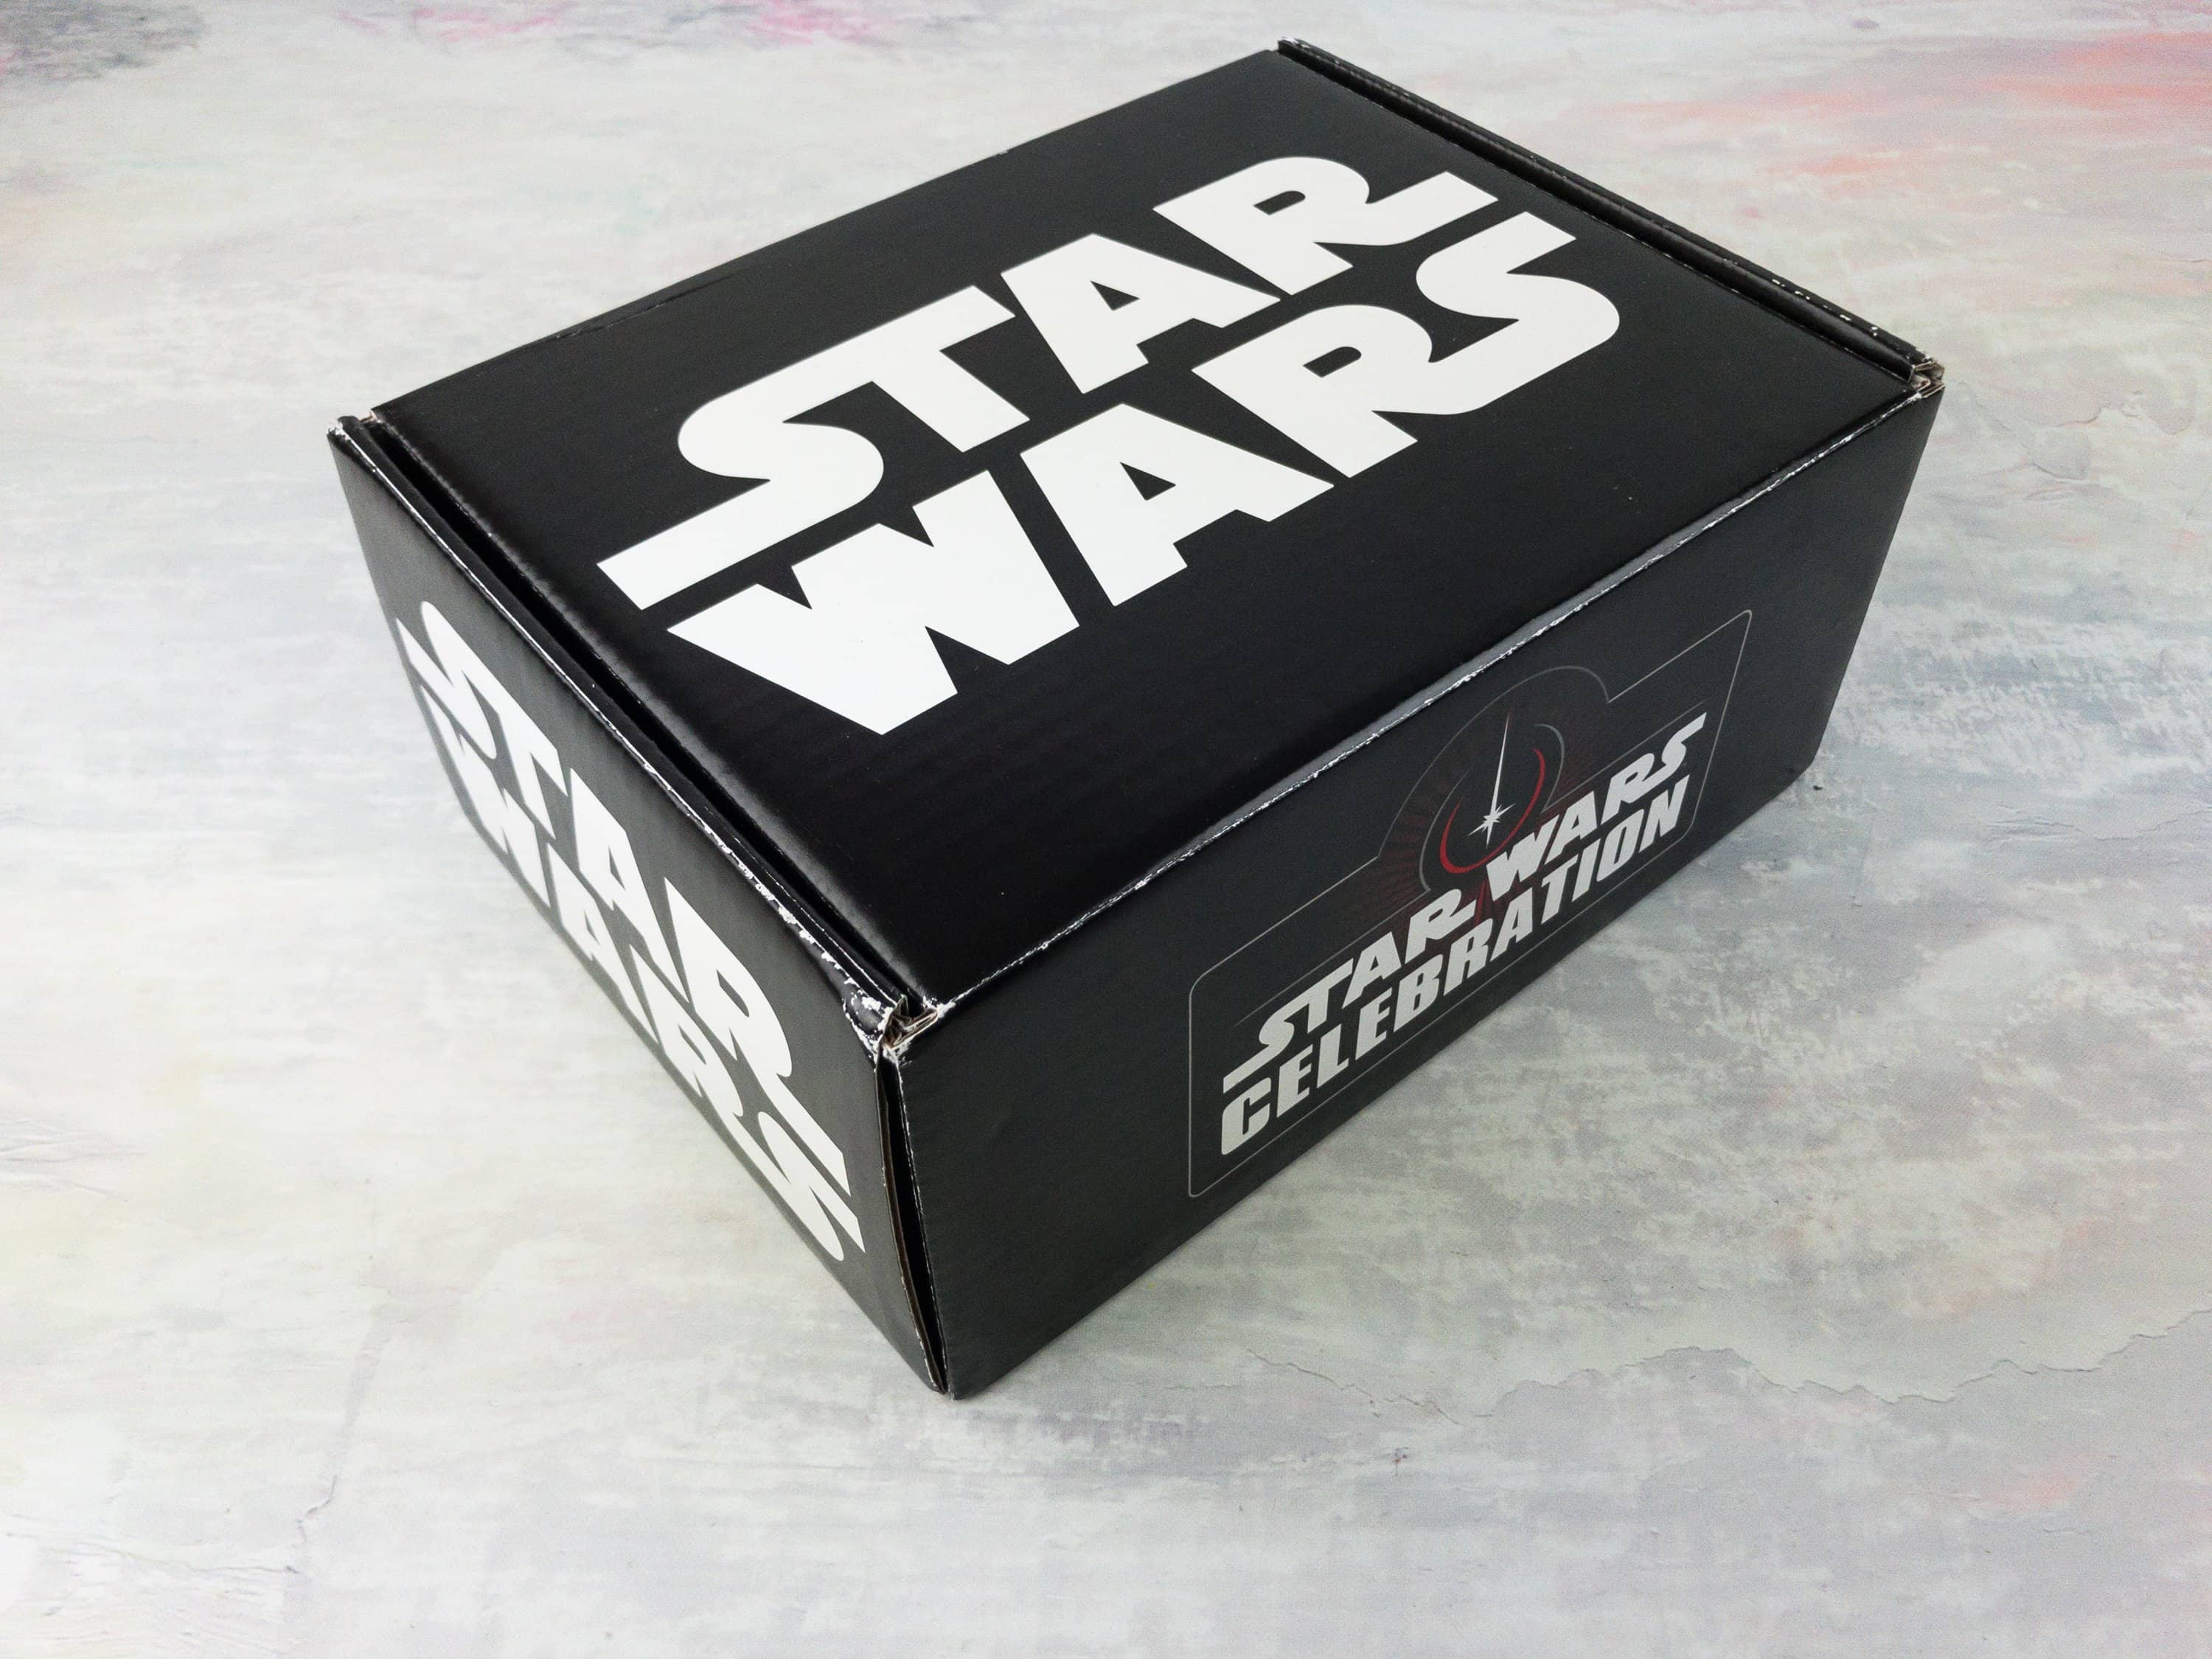 Star Wars Gift Box - Numskull